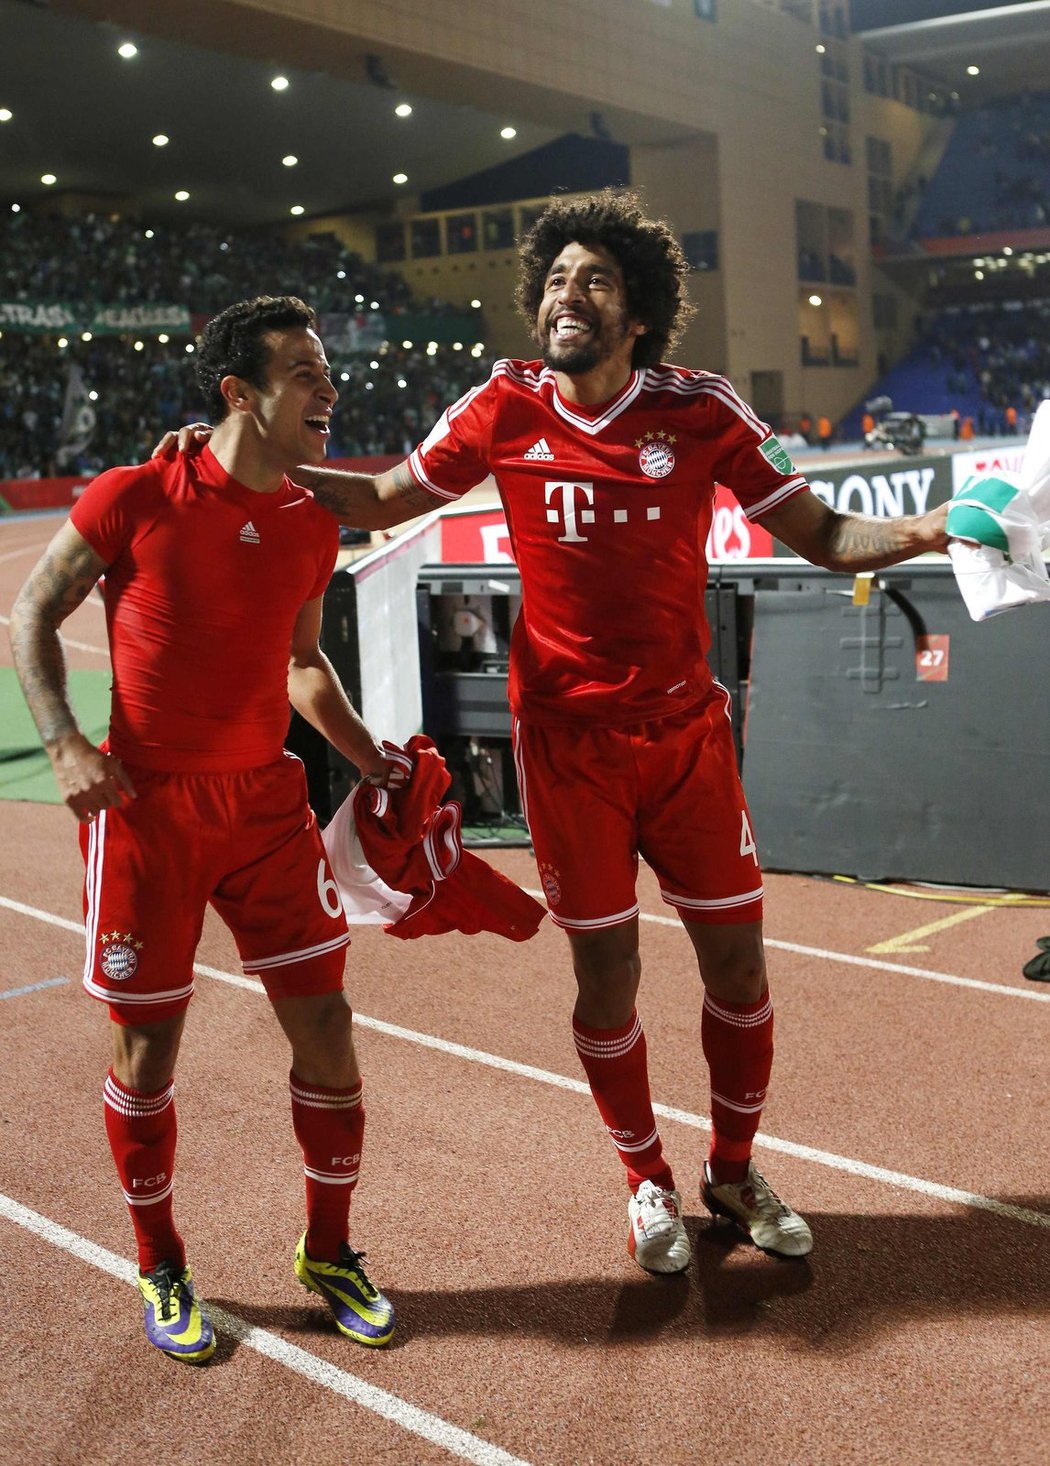 Fotbalisté Bayernu Thiago a Dante slaví triumf ve finále MS klubů